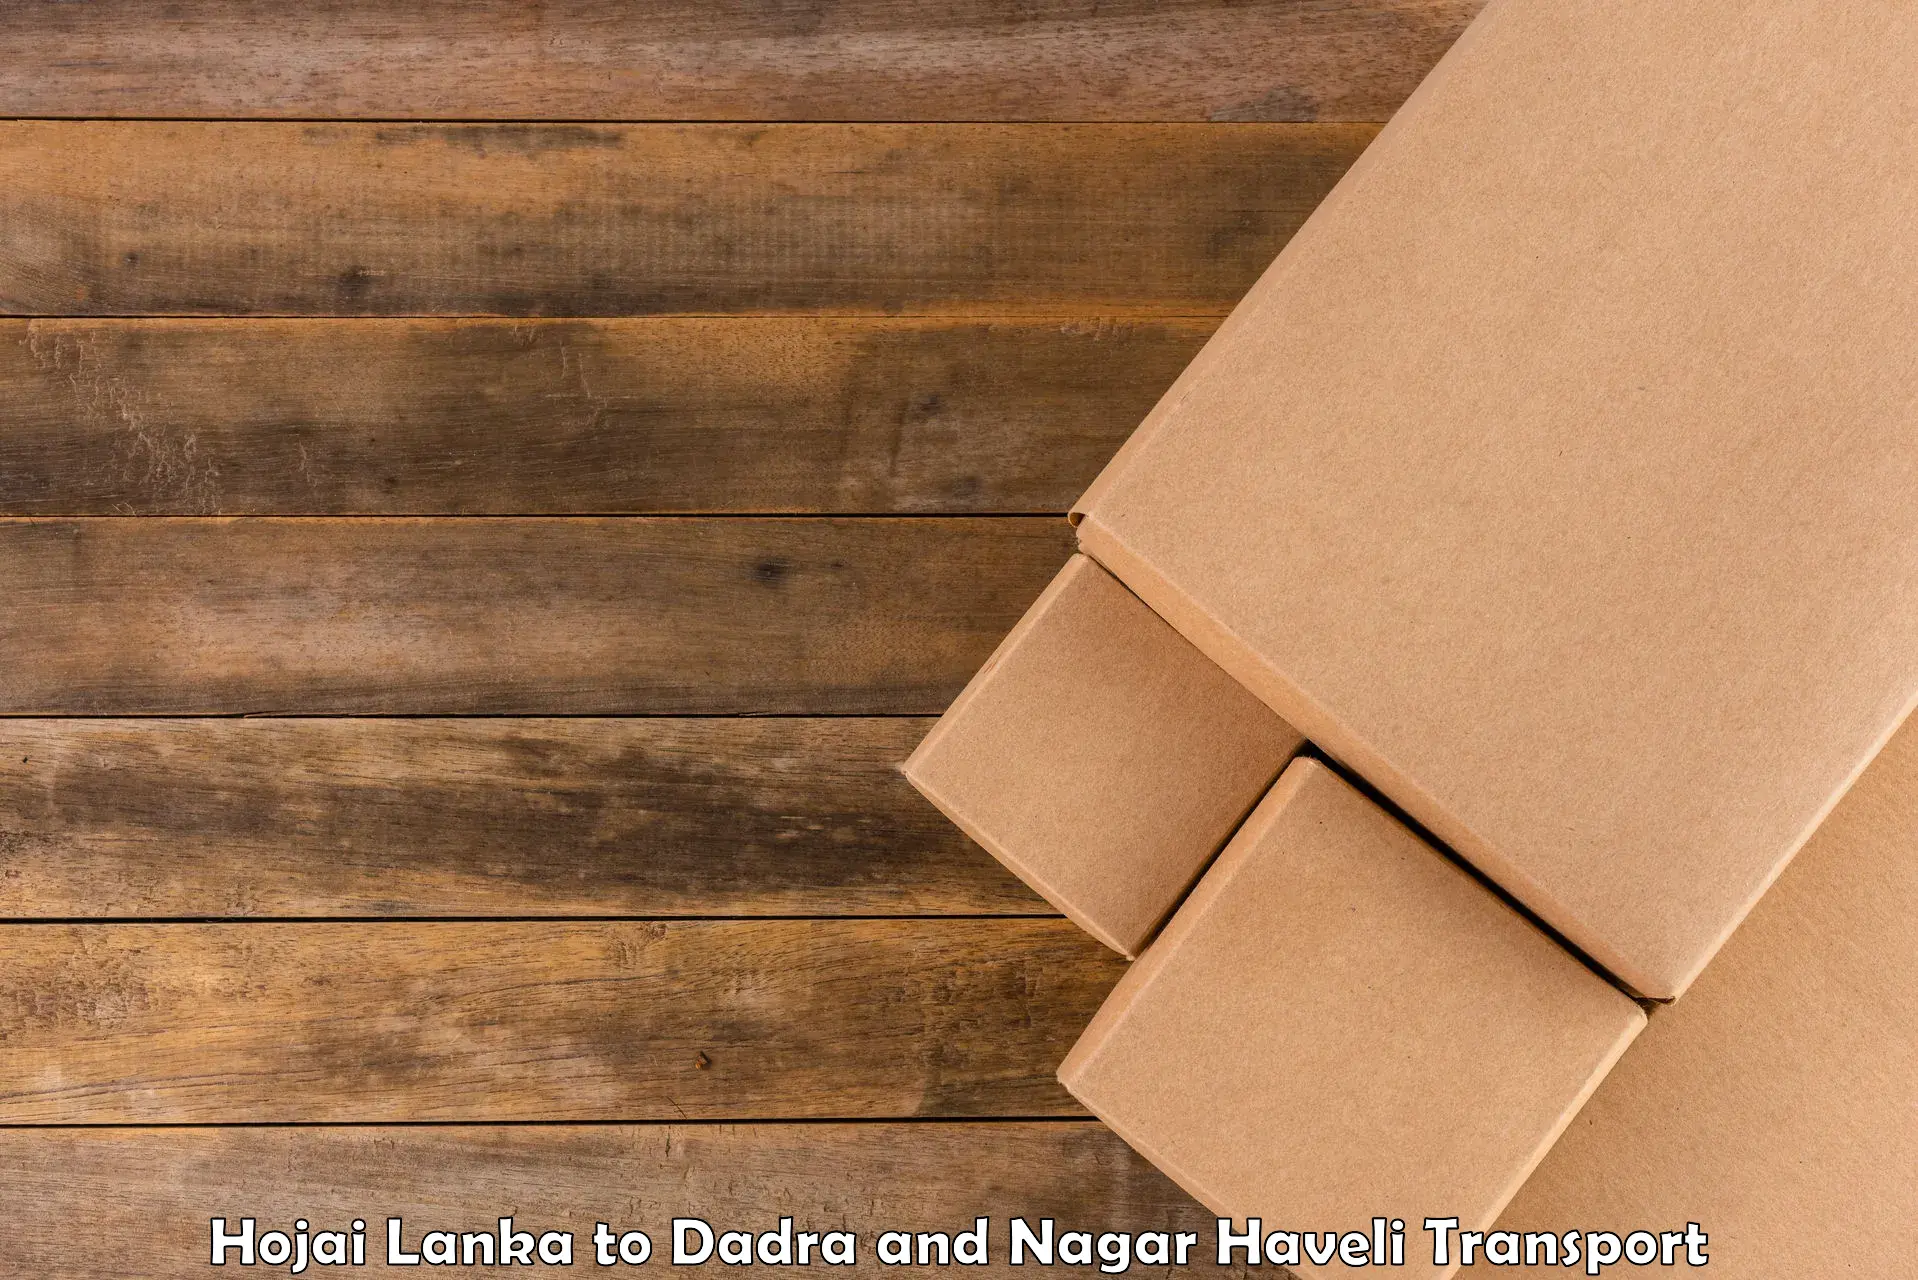 Goods delivery service Hojai Lanka to Dadra and Nagar Haveli